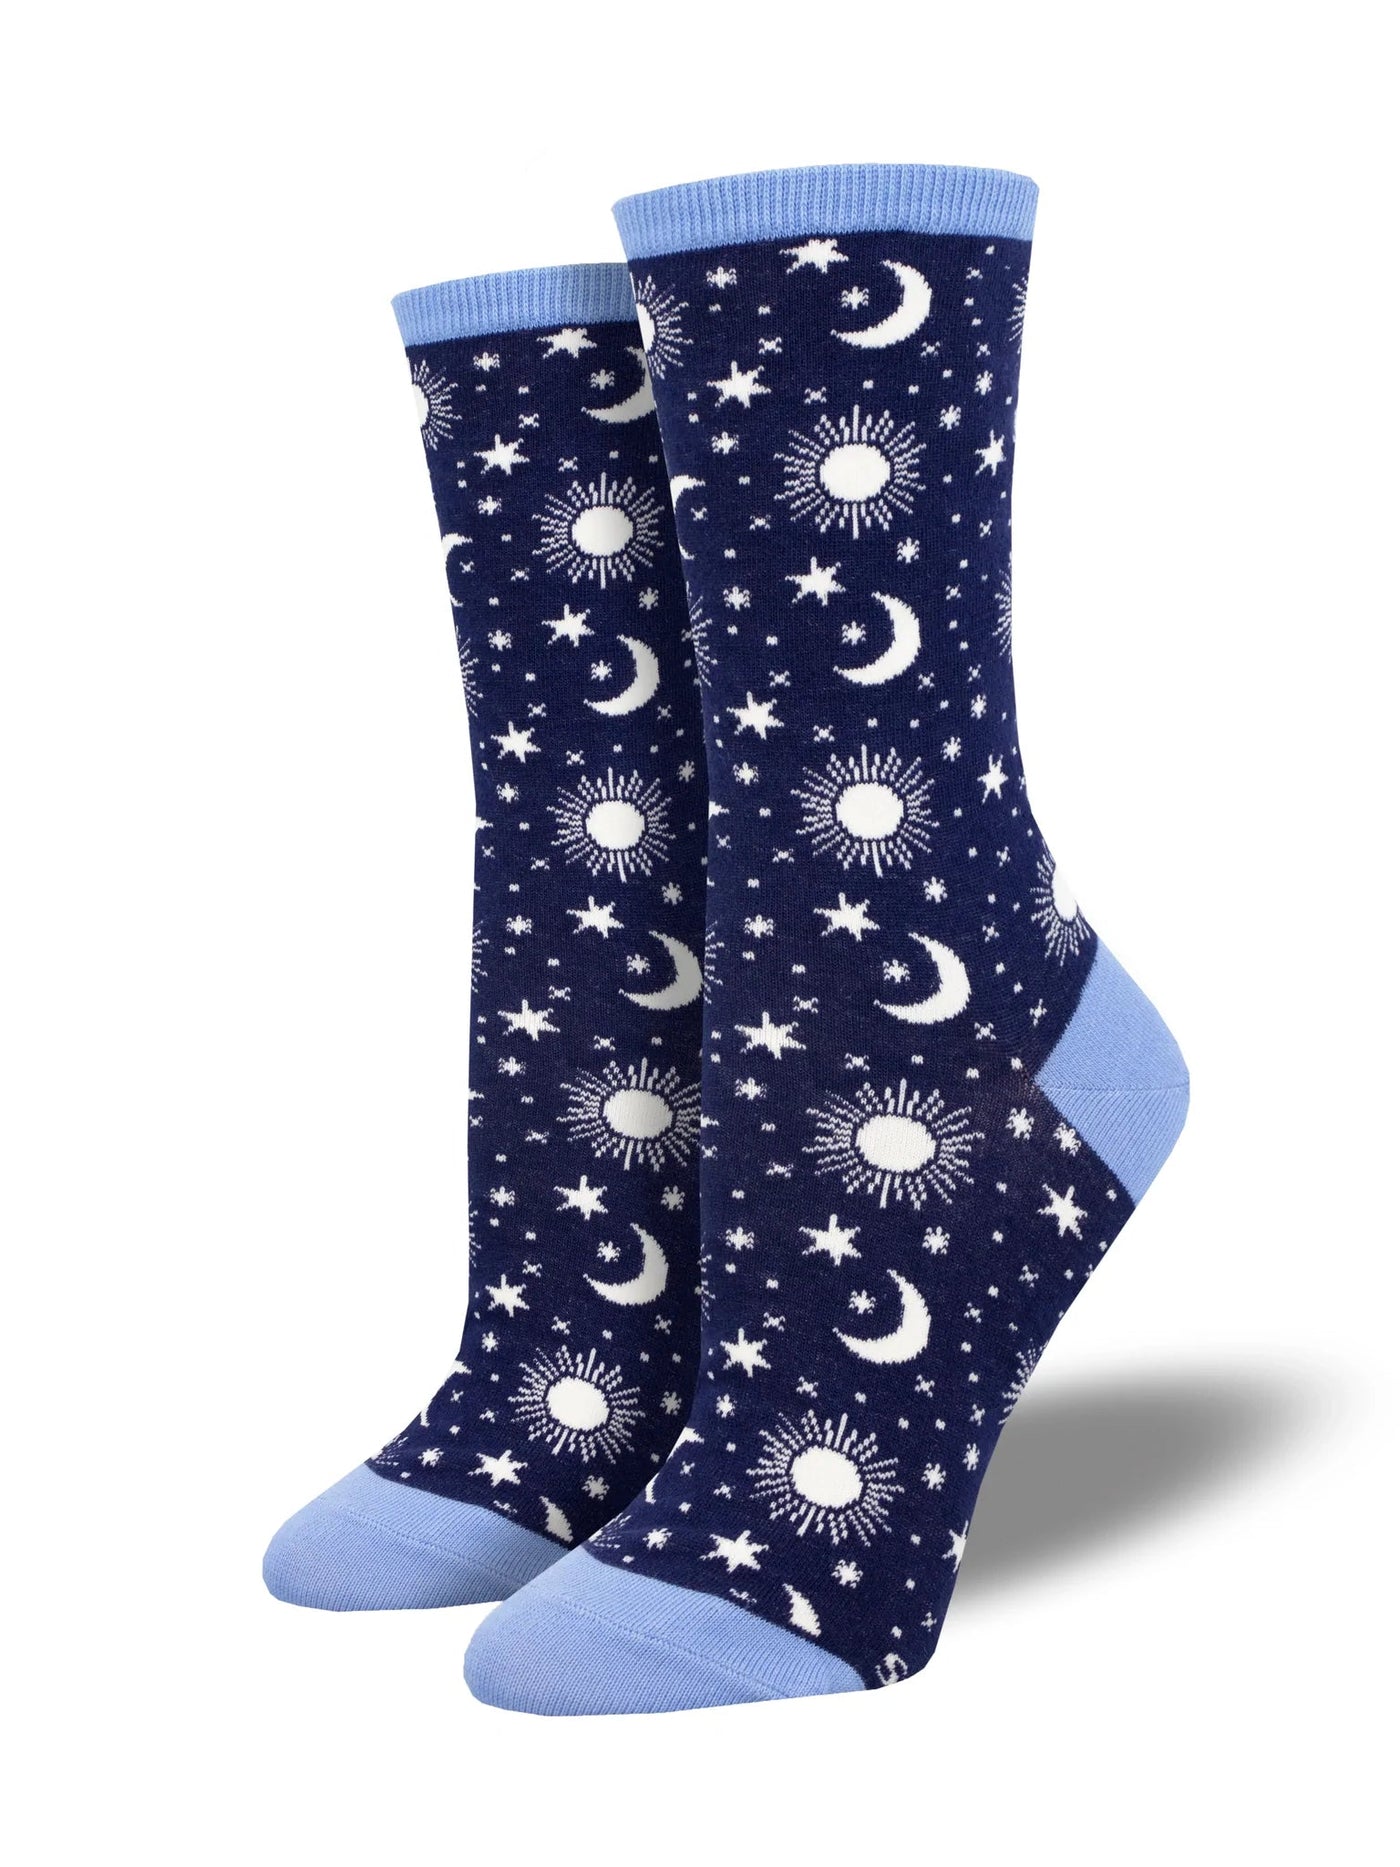 Moon Child Crew Socks | Women's - Knock Your Socks Off